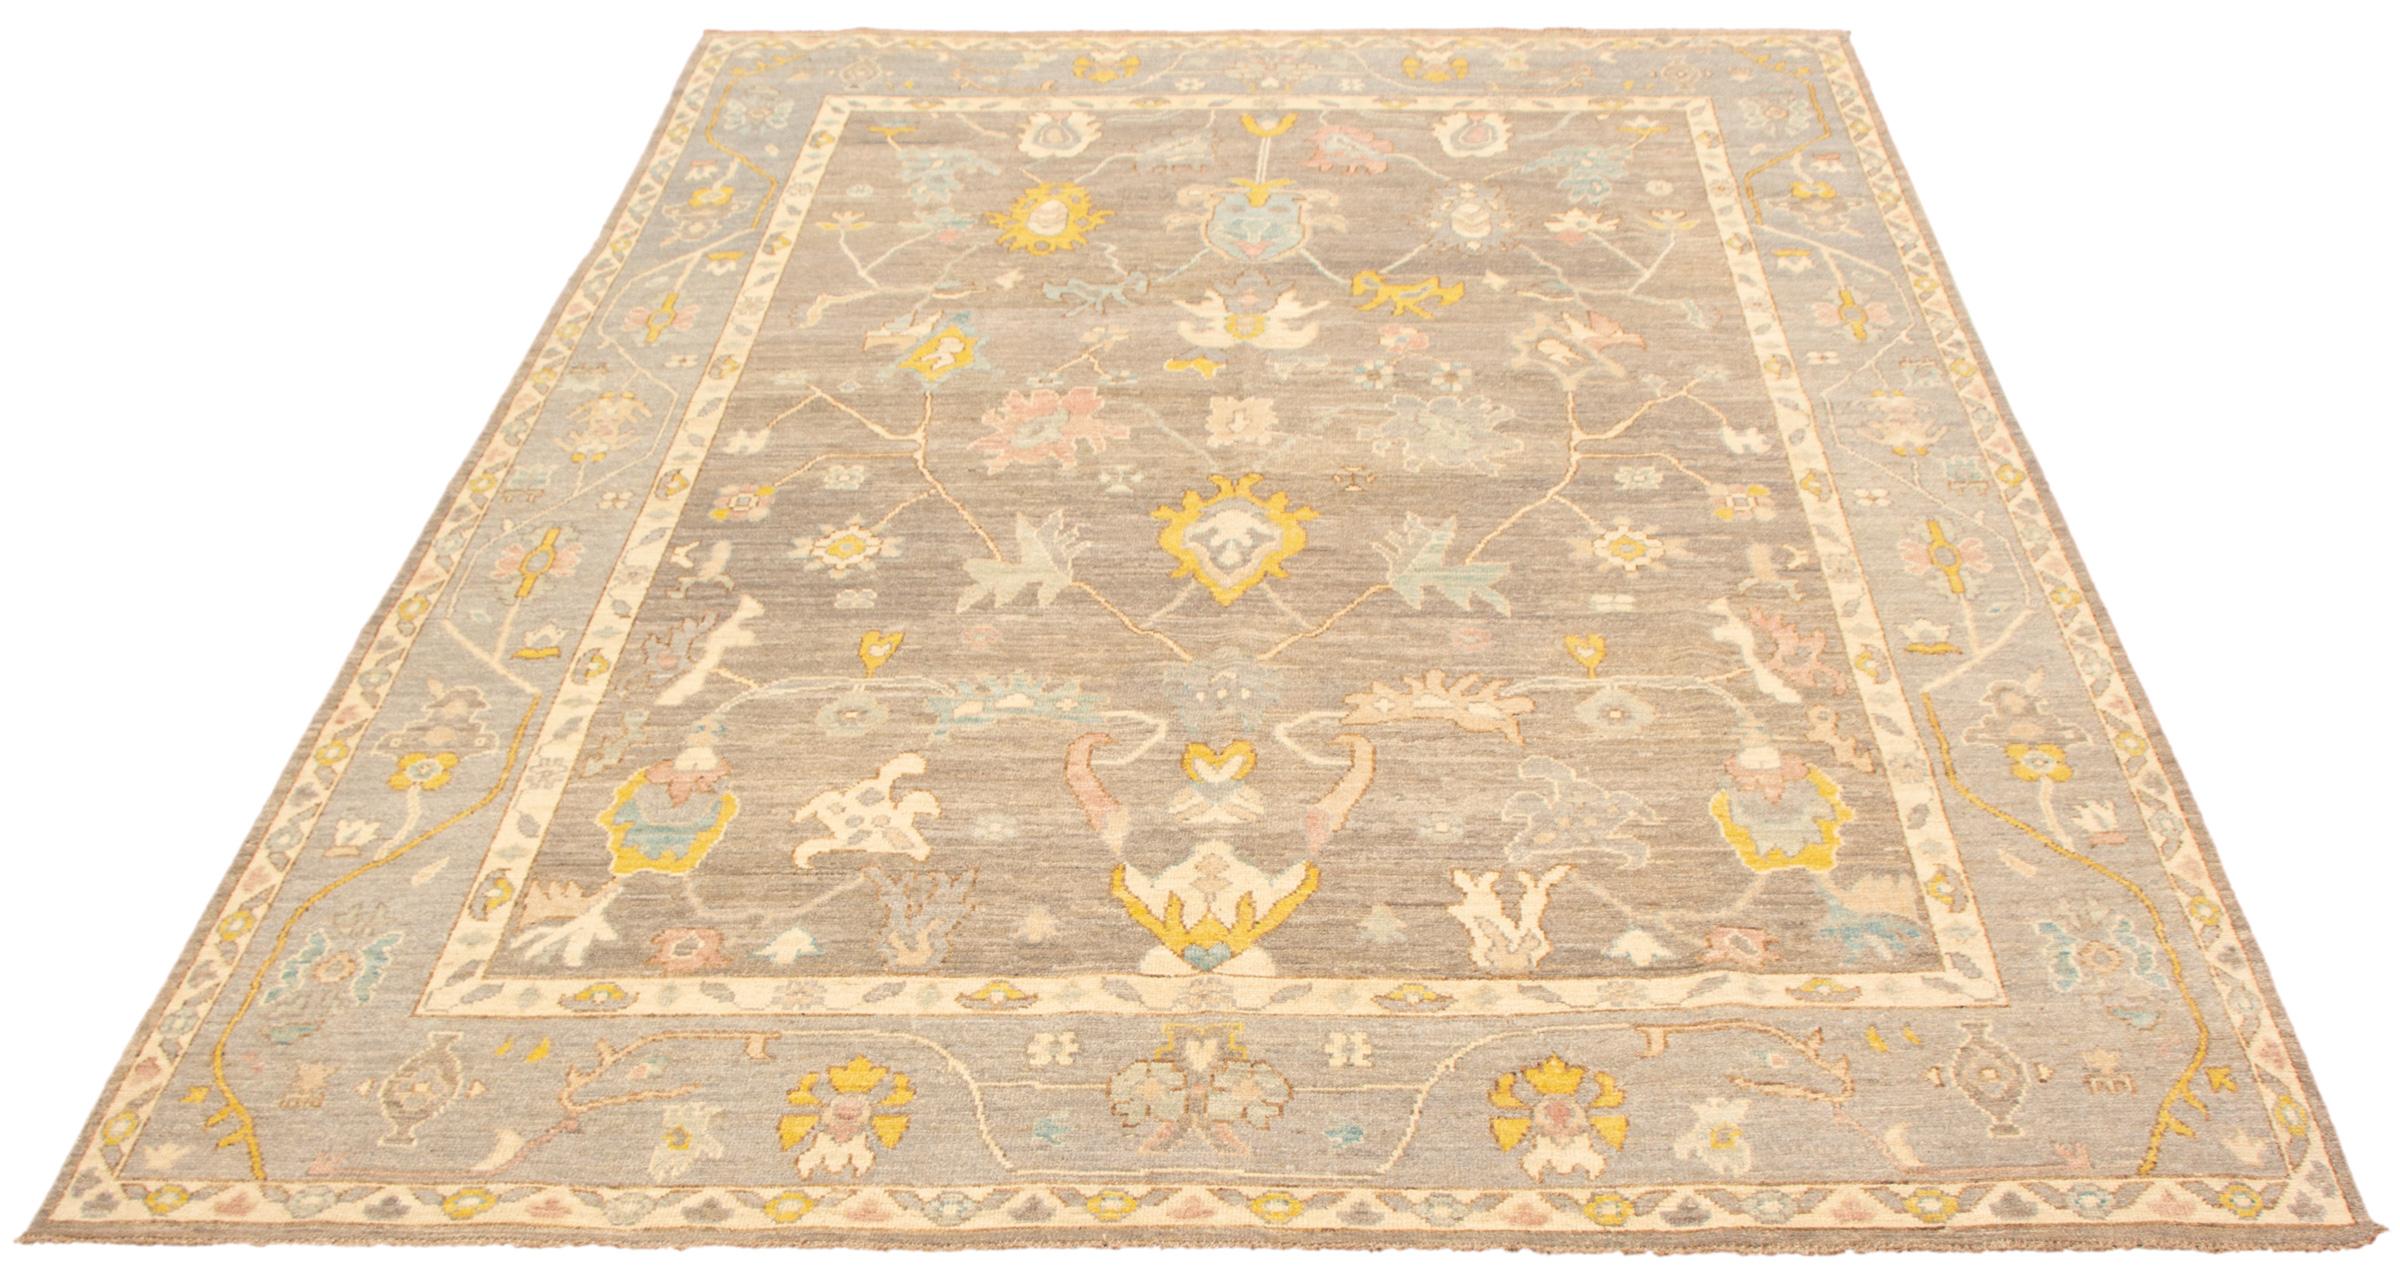 Vegetable Dyed Subdued & Transitional Pastel Persian Oushak Carpet - 9'x12'